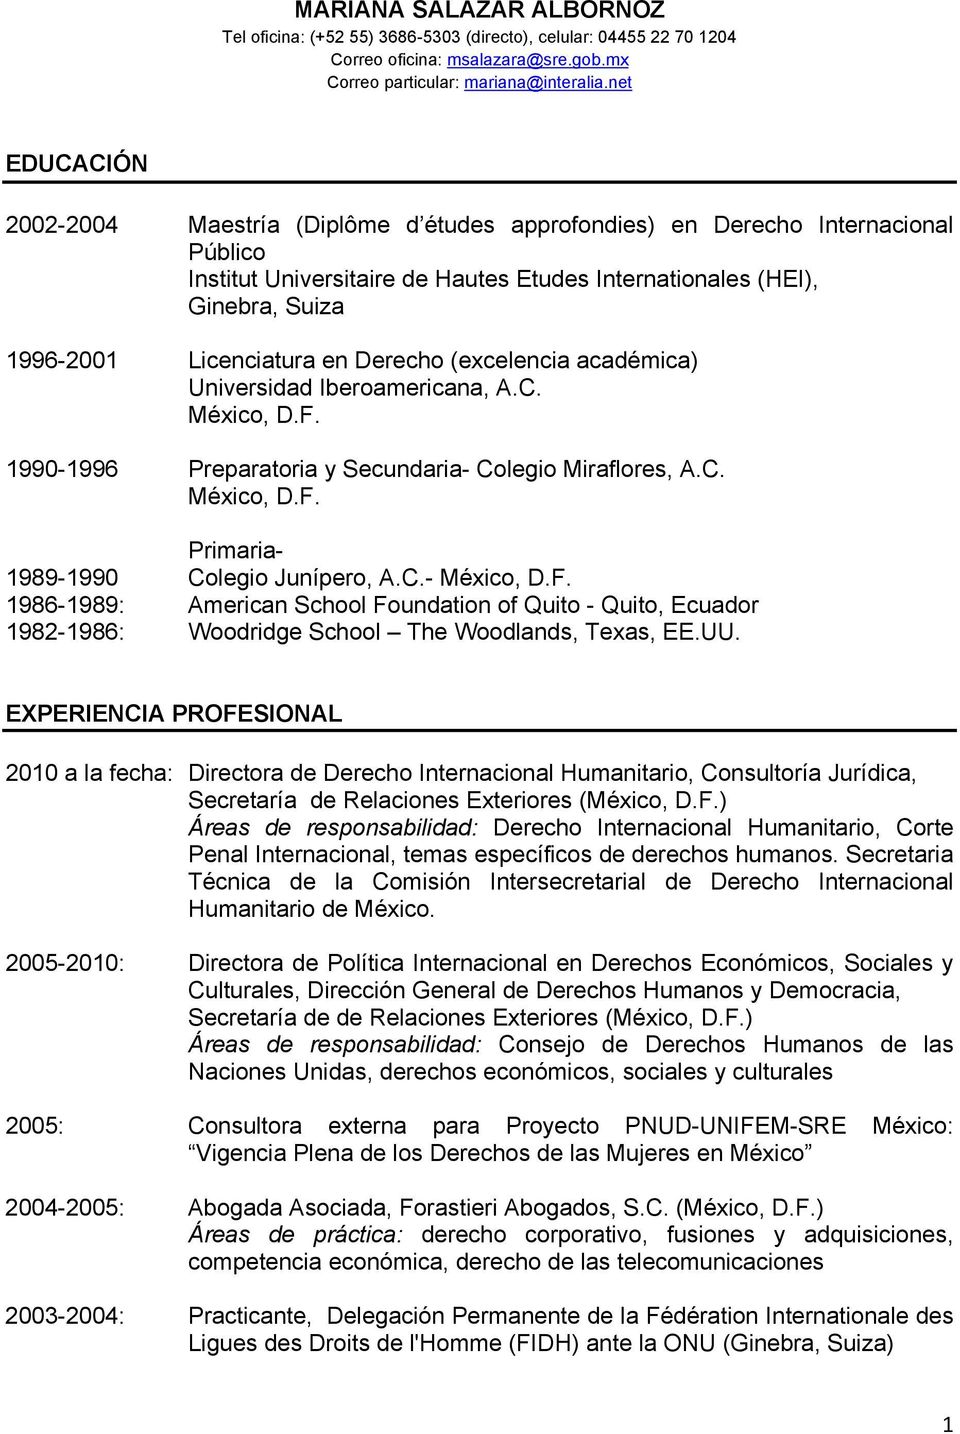 en Derecho (excelencia académica) Universidad Iberoamericana, A.C. México, D.F. 1990-1996 Preparatoria y Secundaria- Colegio Miraflores, A.C. México, D.F. Primaria- 1989-1990 Colegio Junípero, A.C.- México, D.